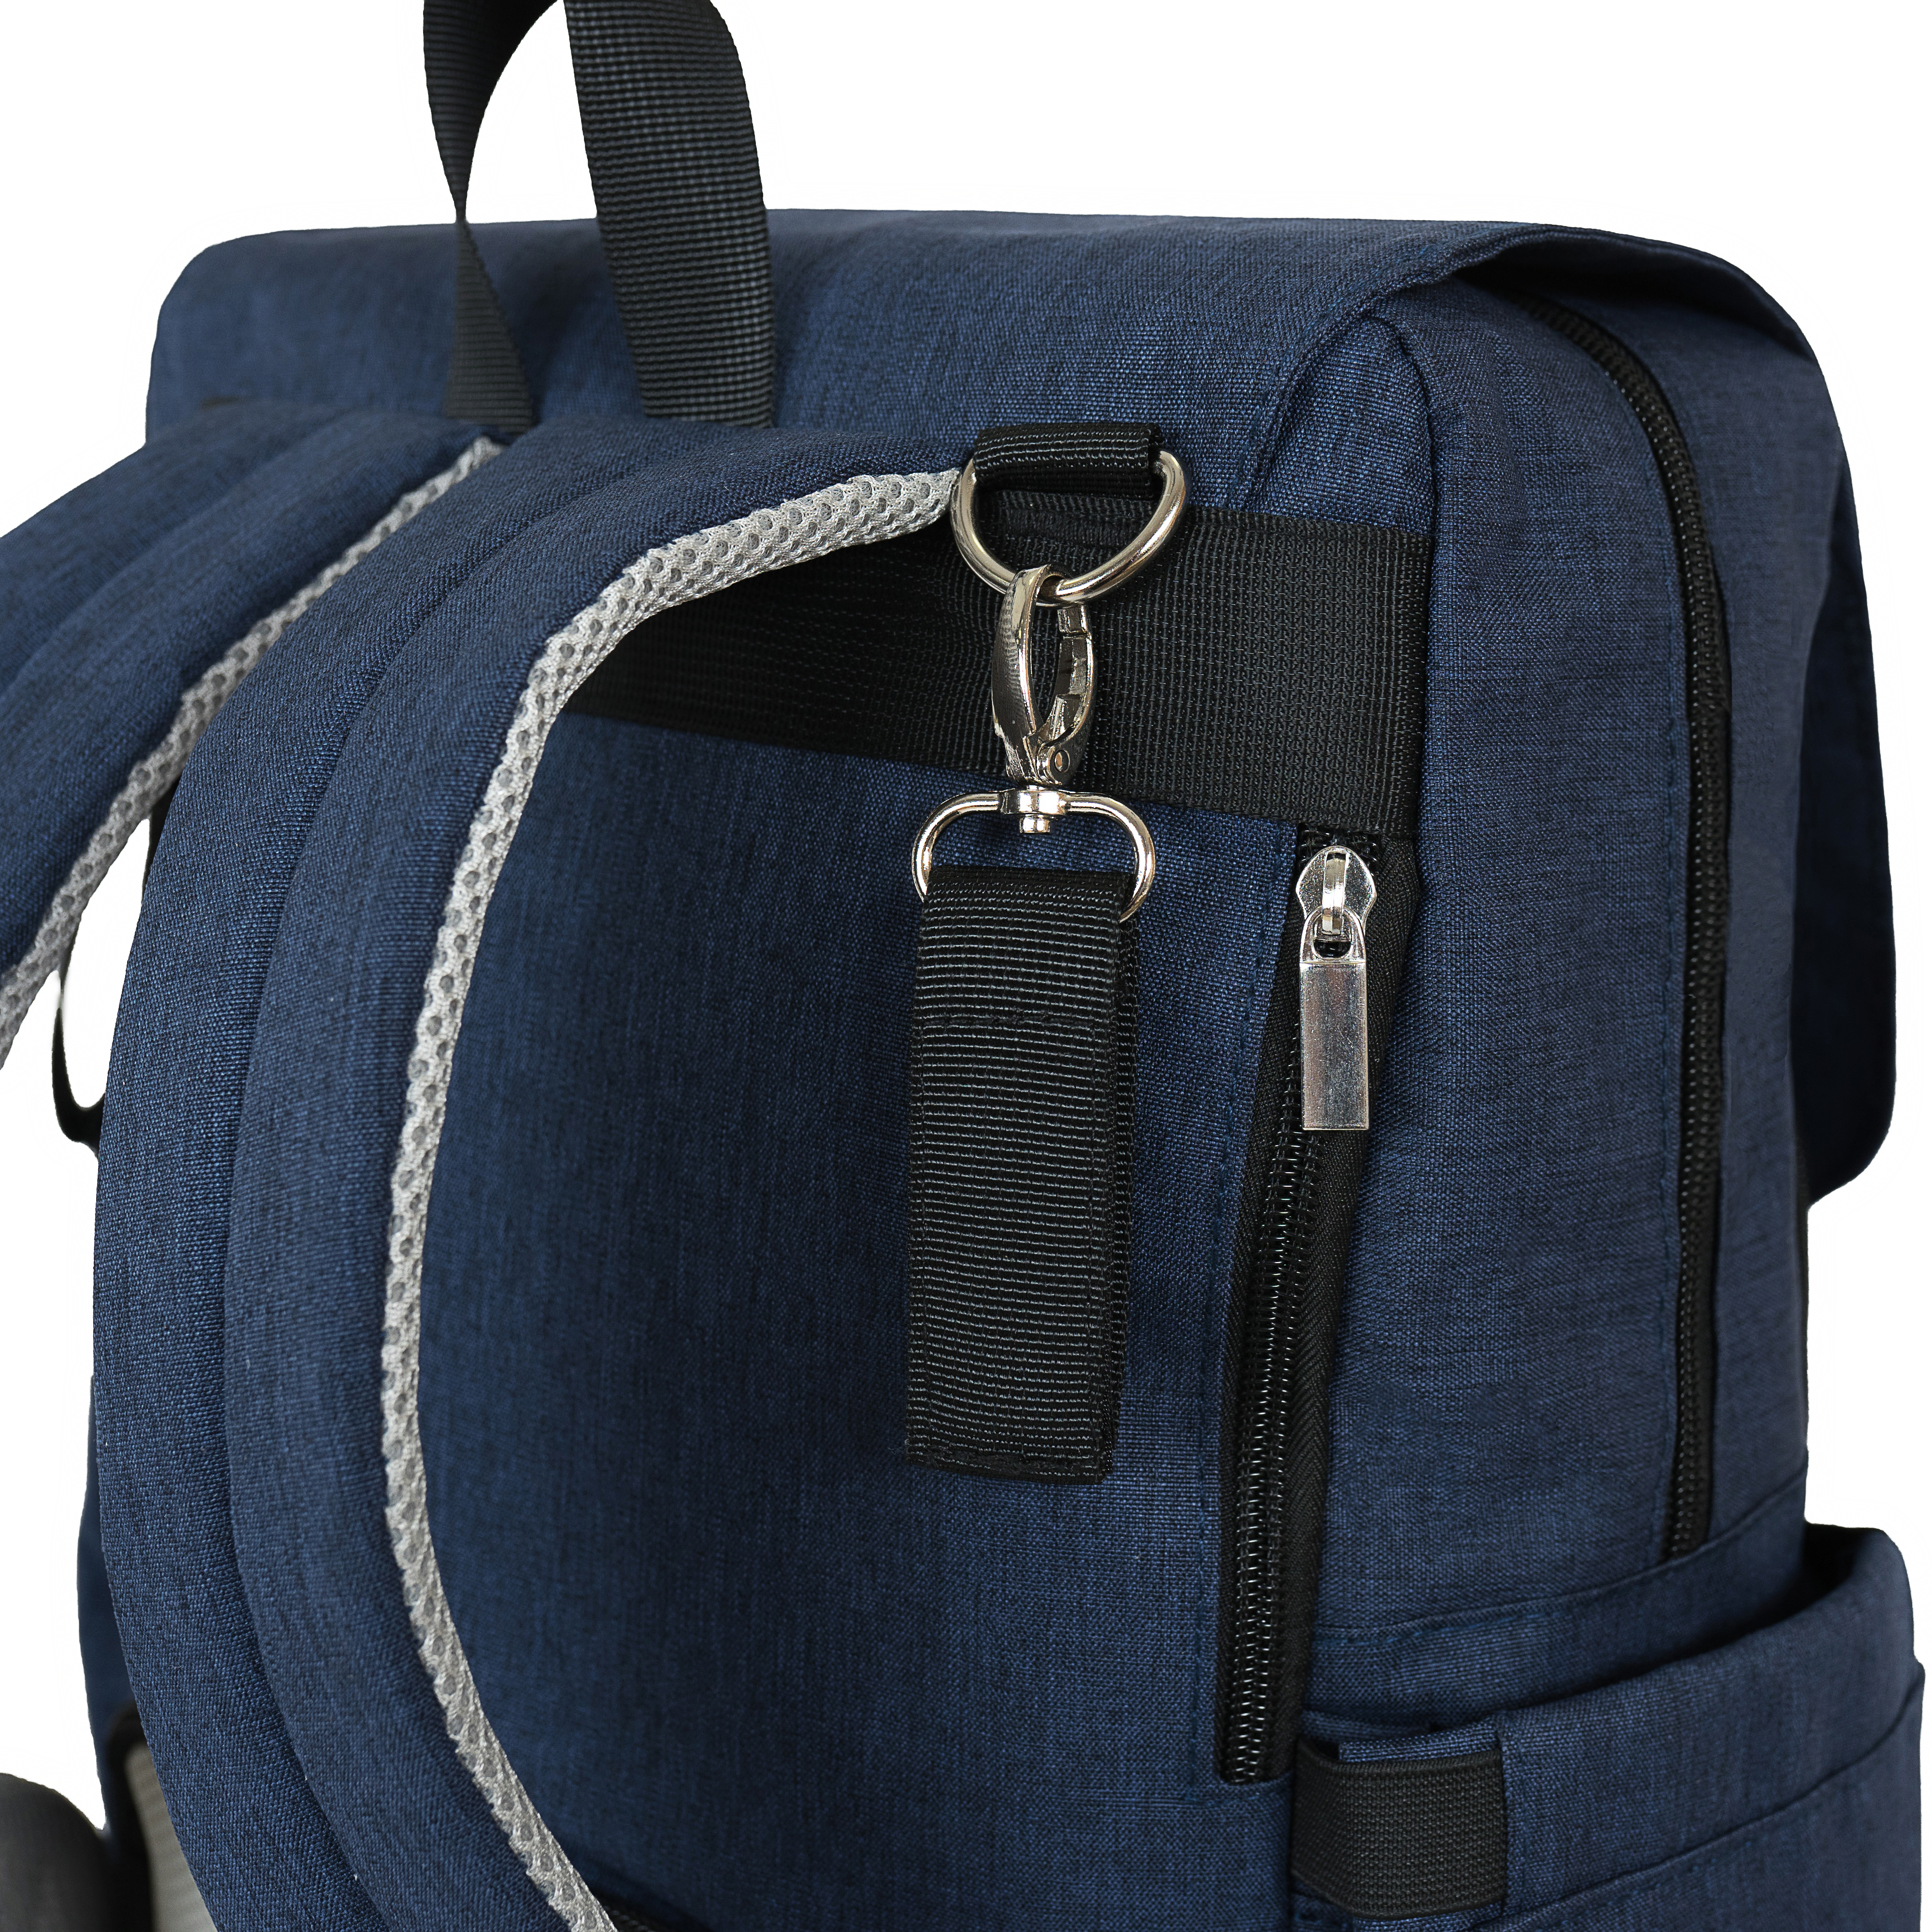 Рюкзак для мамы Nuovita Capcap hipster Темно-синий - фото 10